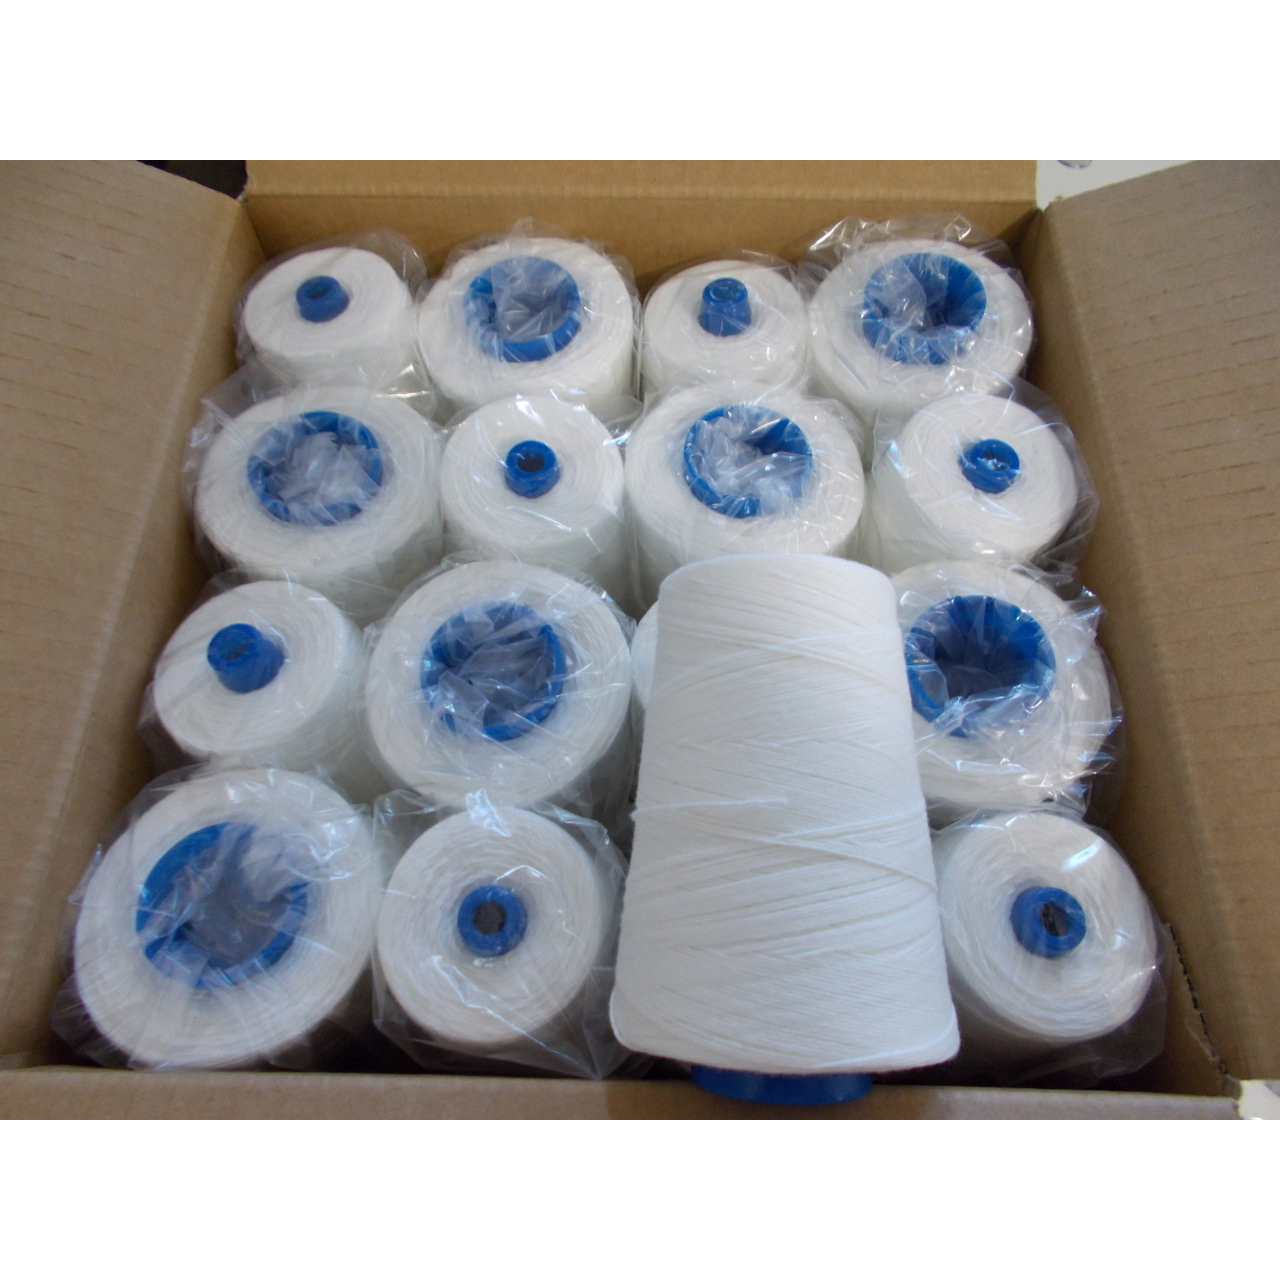 Case (32 Cones) of 12/5 Polyester White Thread 8 oz